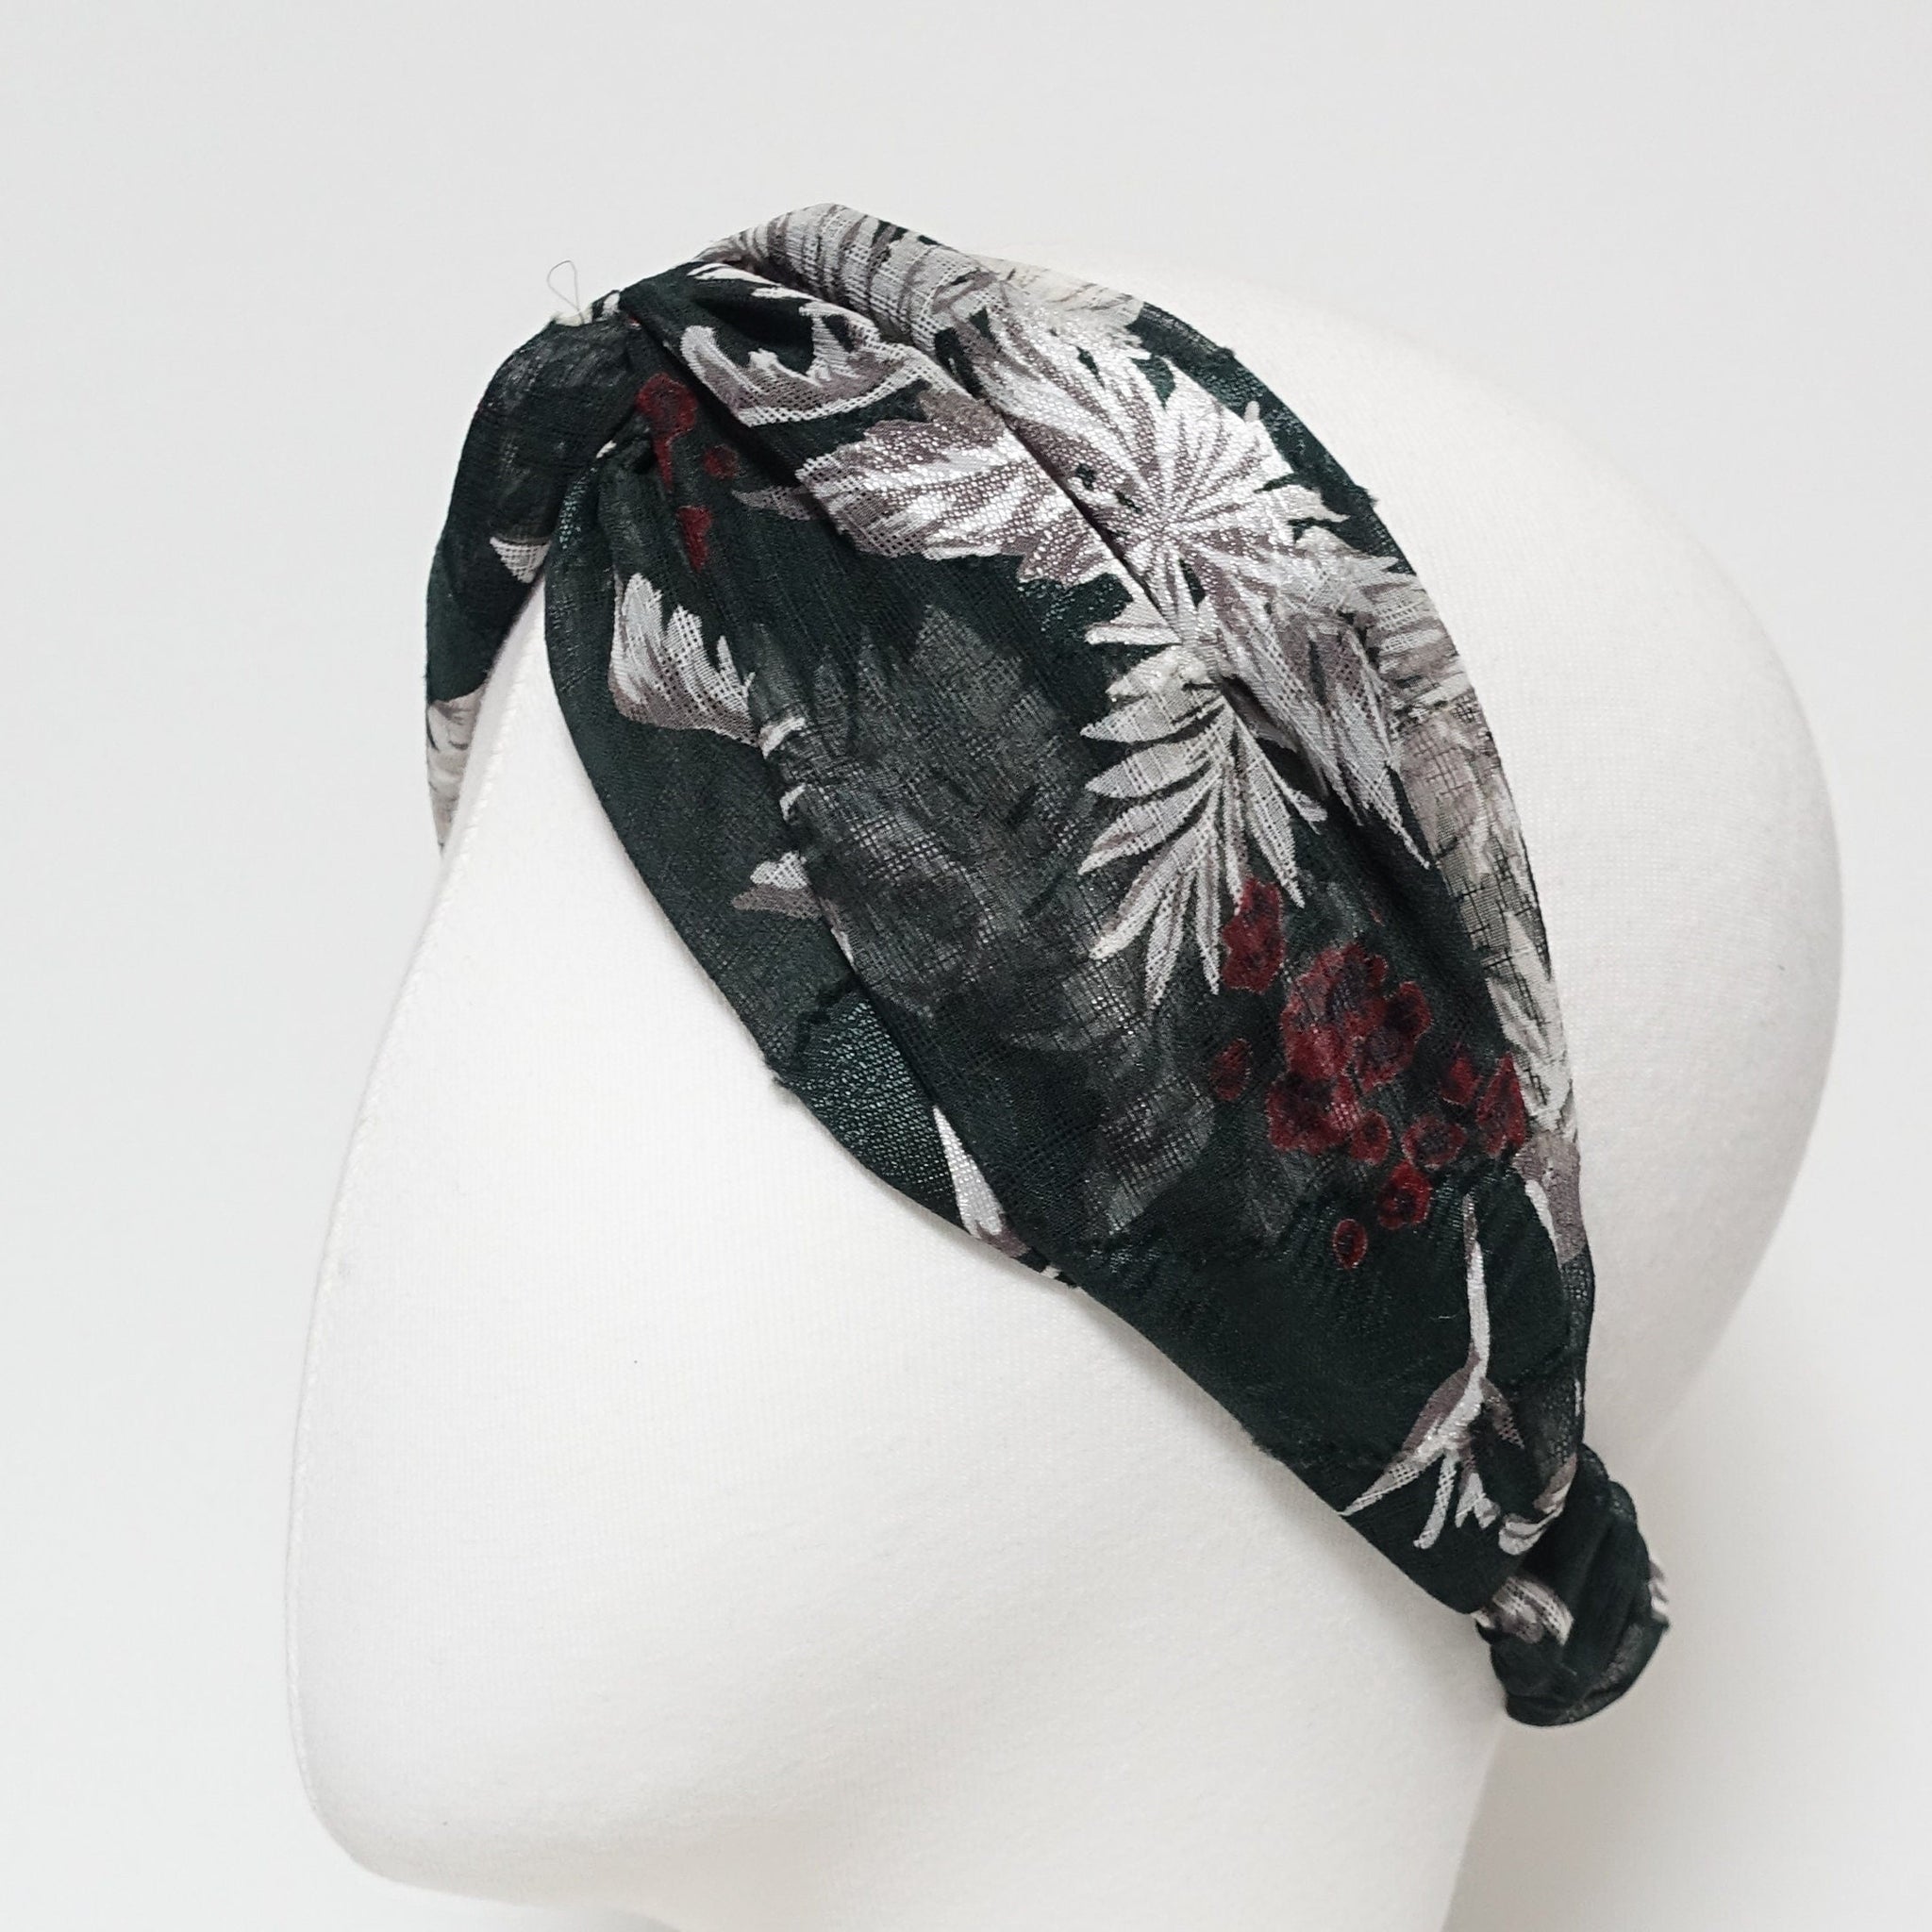 VeryShine Headband wild tropical plant headband leaves print cross fashion hairband stylish woman hair accessory